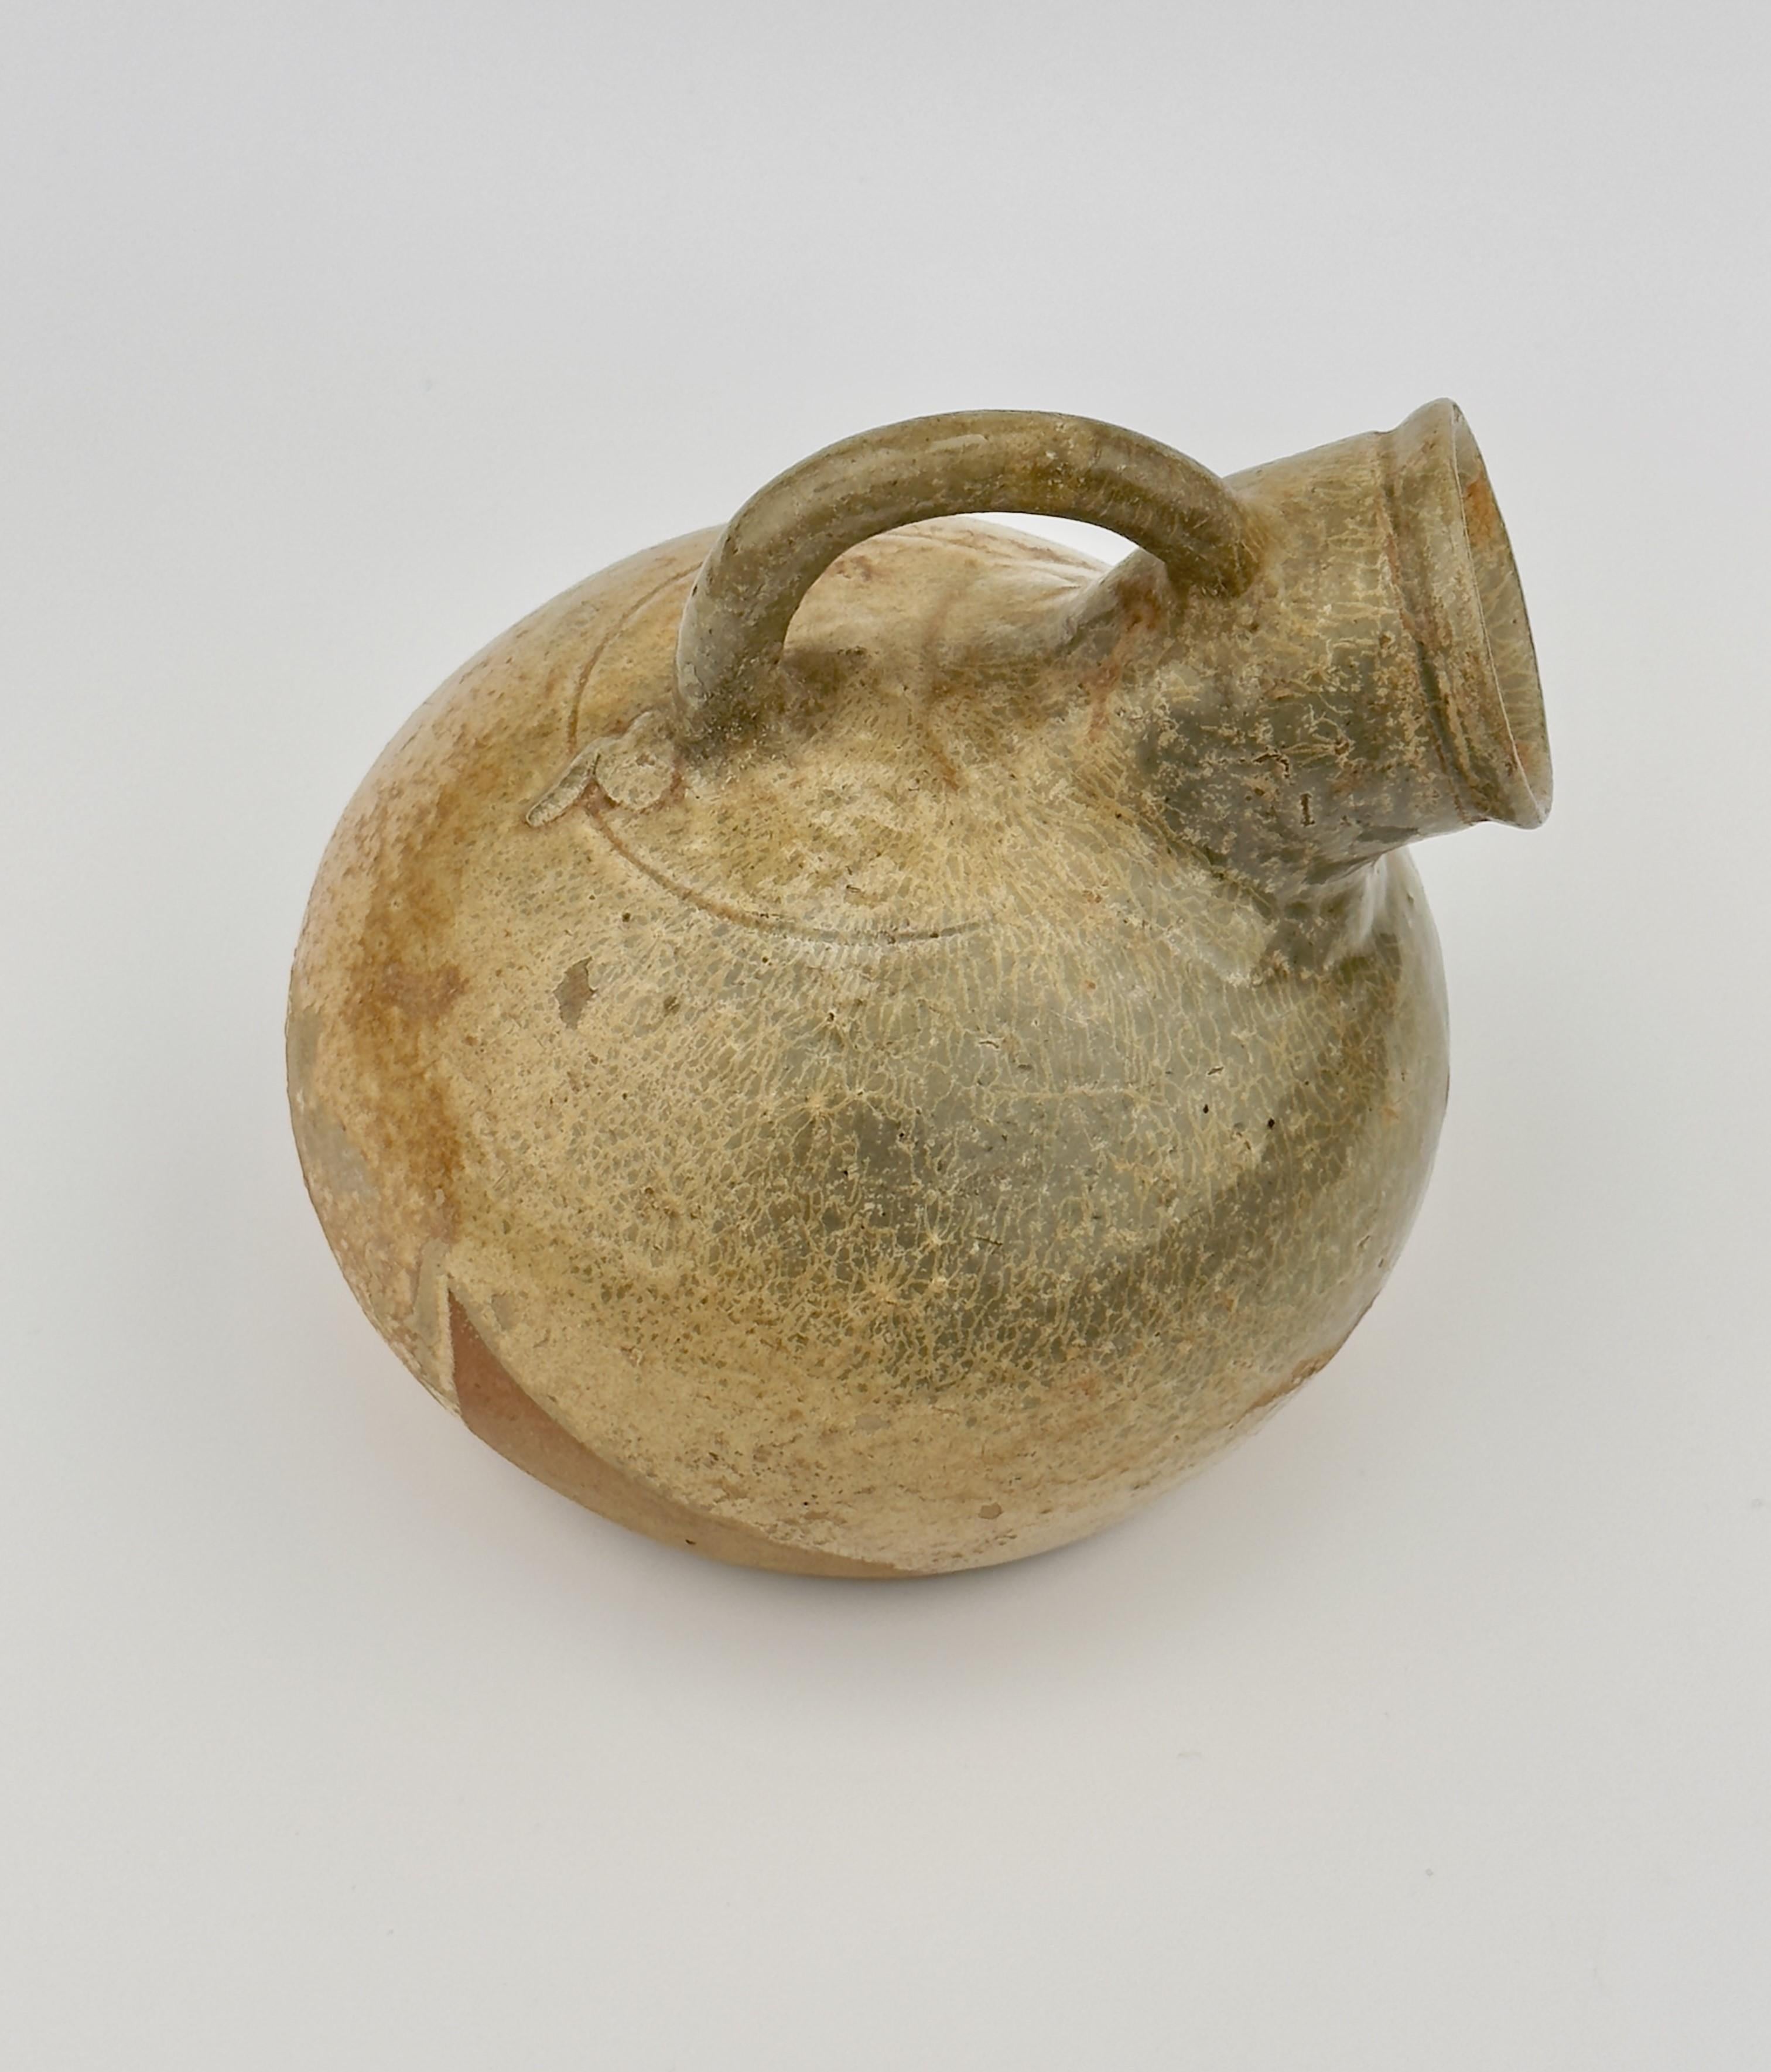 Rare Yue Celadon-Glazed Vessel, Jin dynasty (265-420) For Sale 1